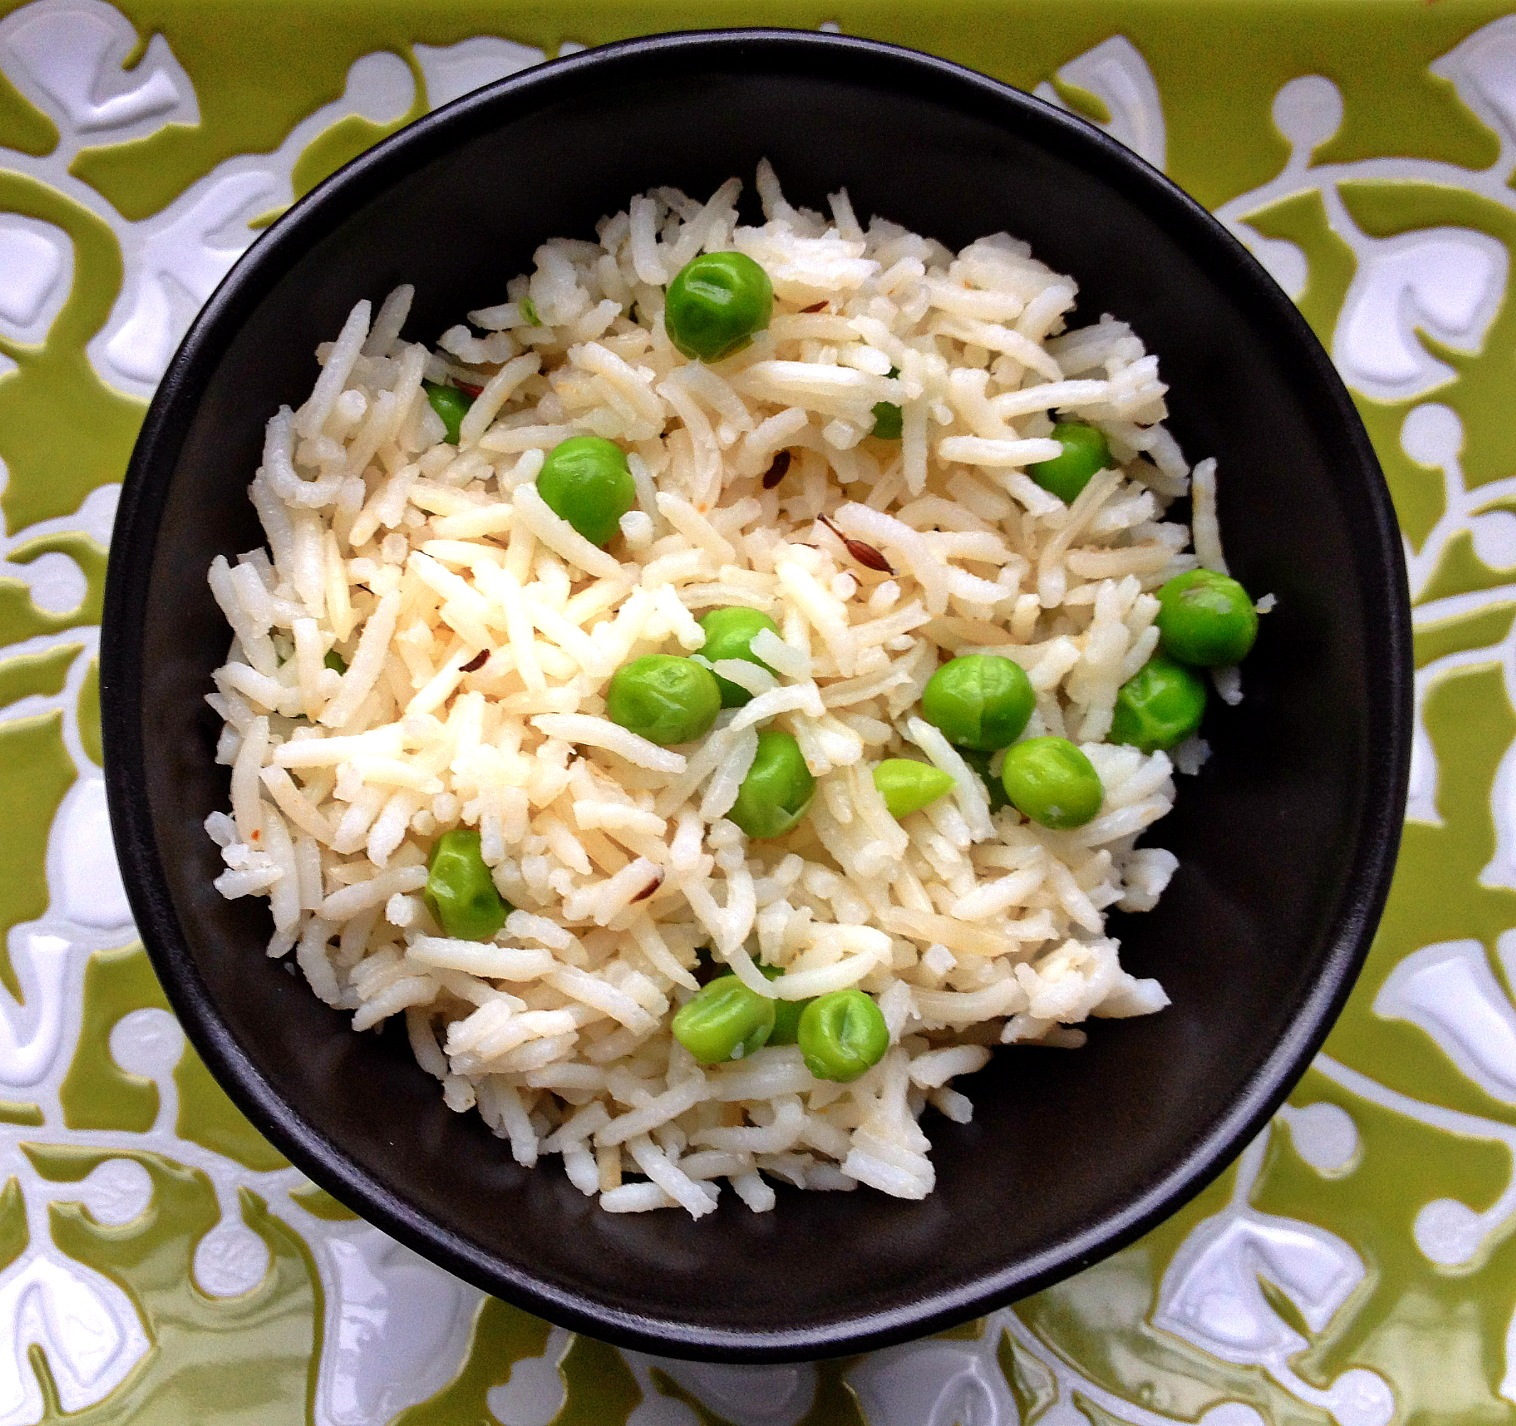 Bowl of basmati rice with green peas